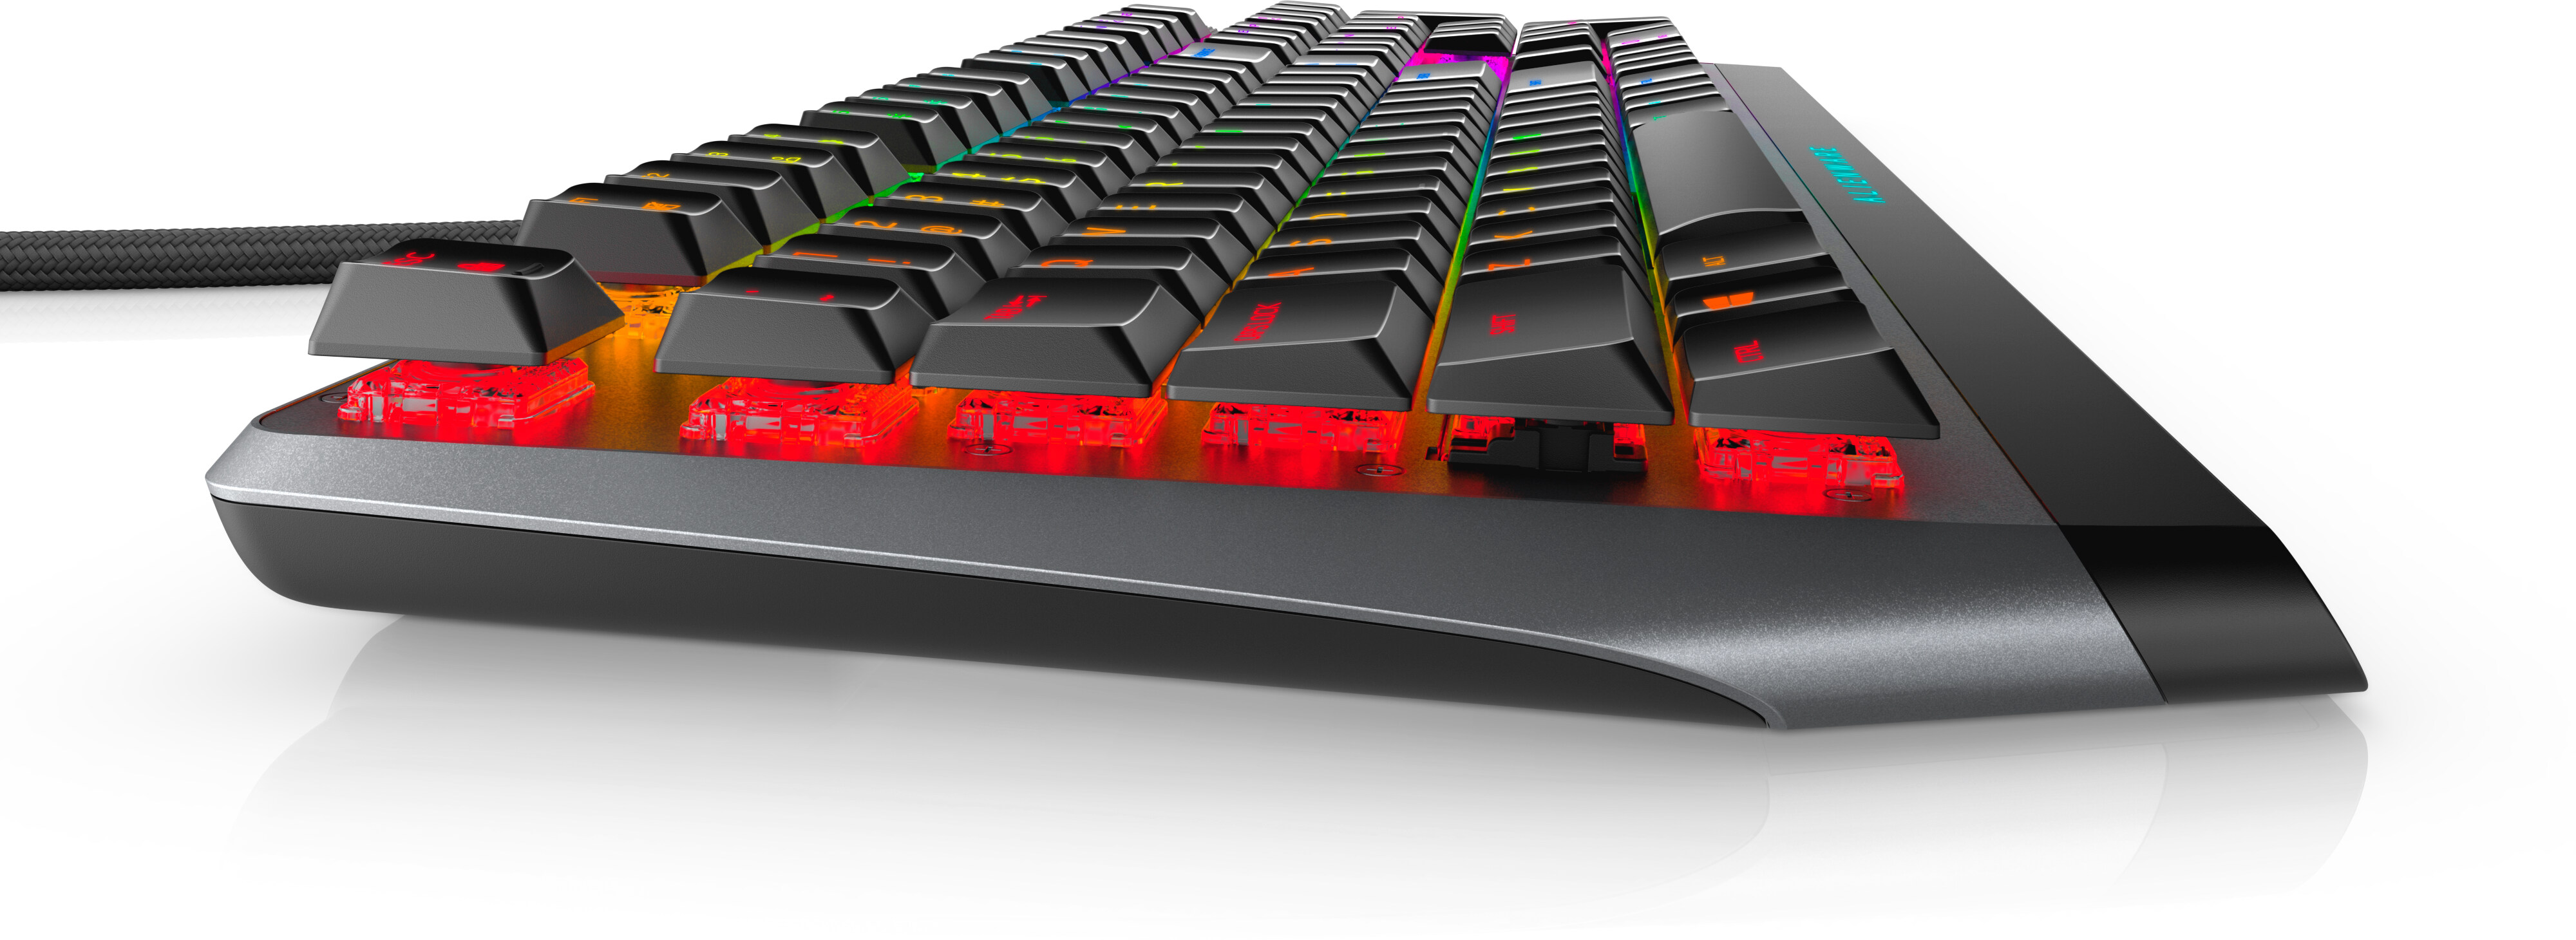 Alienware Low Profile RGB Mechanical Gaming Keyboard - AW510K - Dark Side  Of The Moon